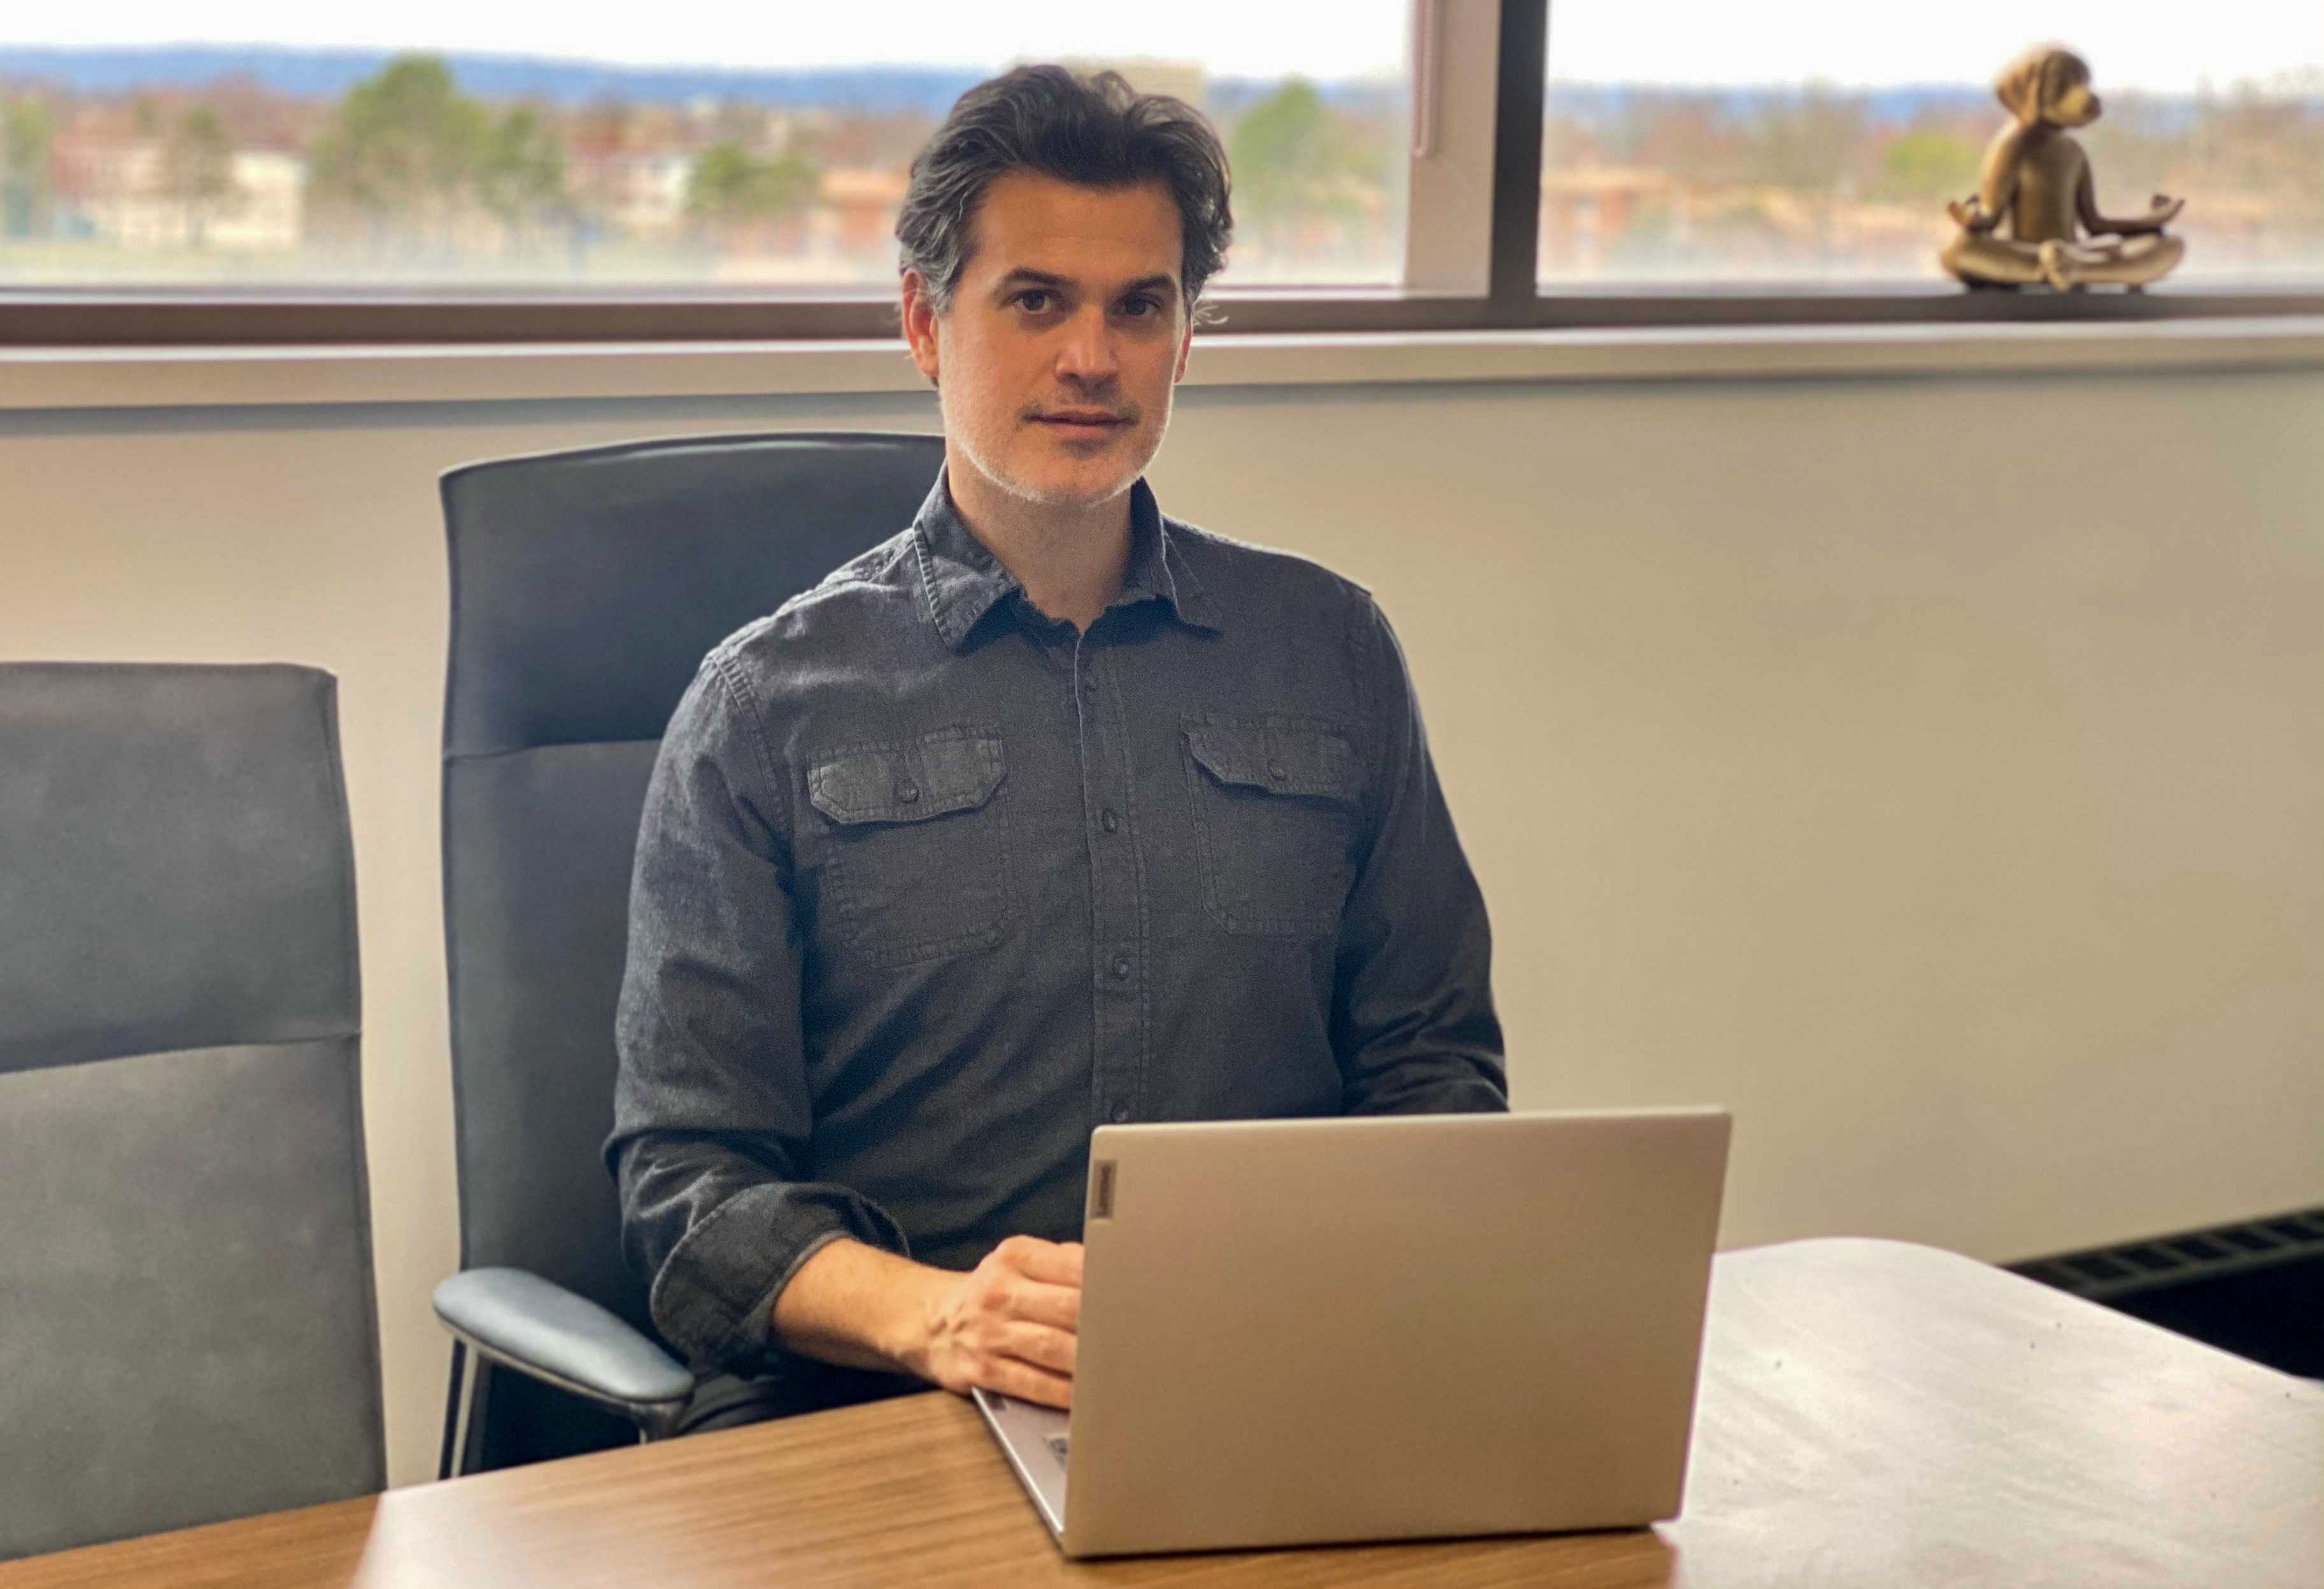 Psychologist Peter Economou sits at a desk with his laptop